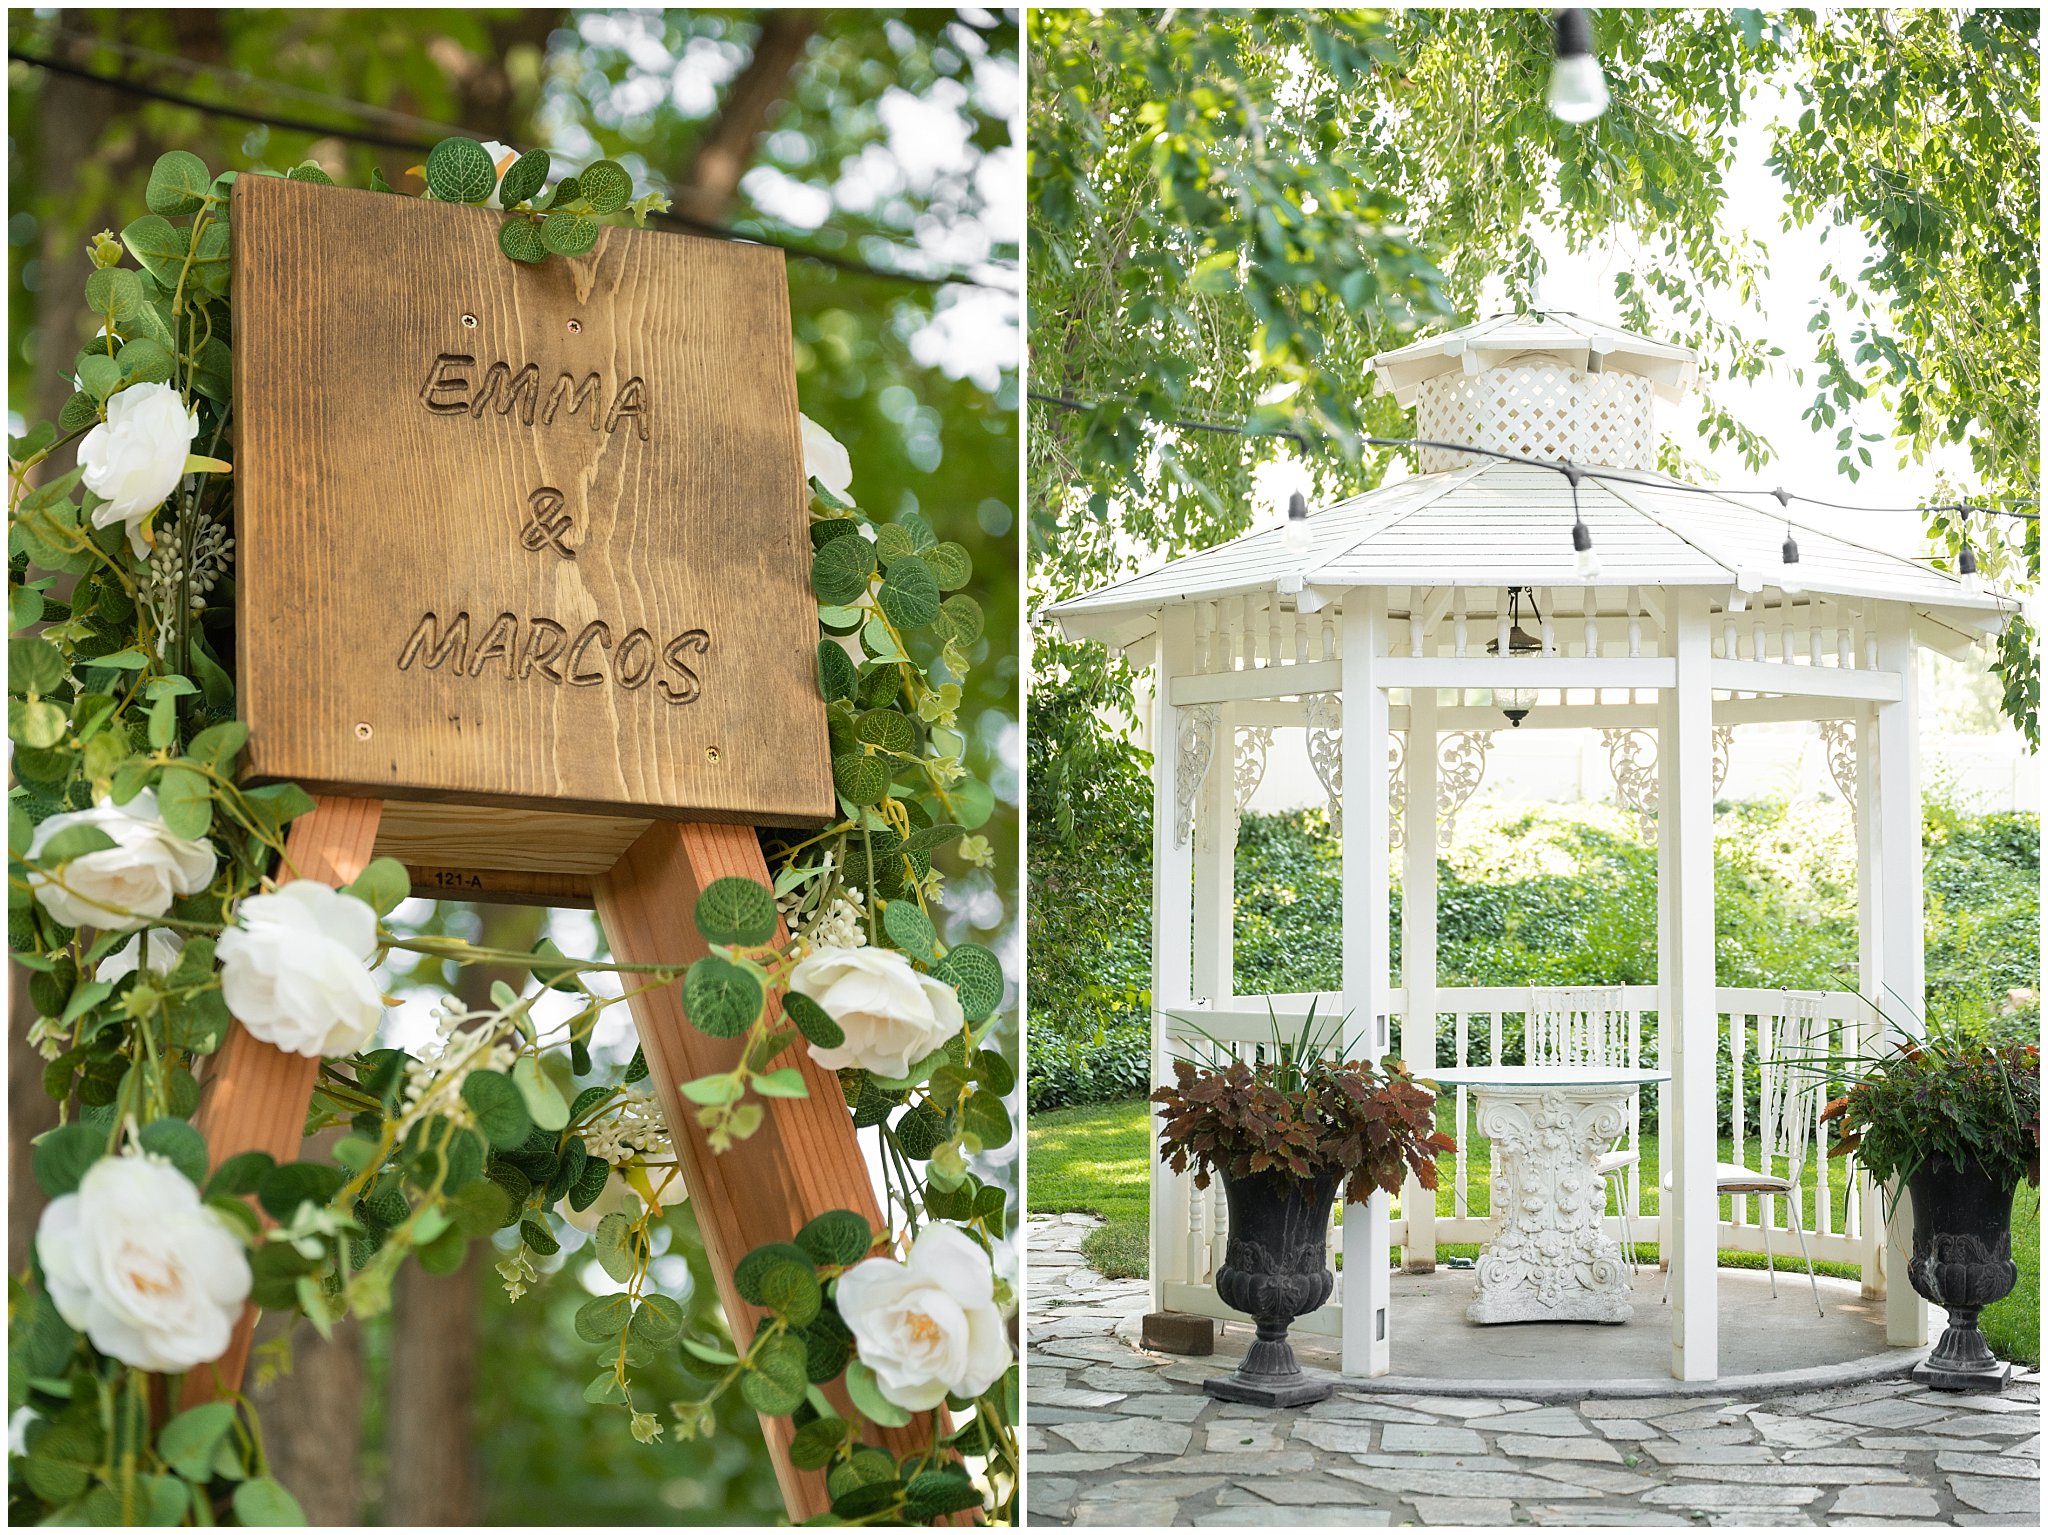 Ceremony arch and gazebo | Intimate Utah Summer Garden Wedding | Jessie and Dallin Photography